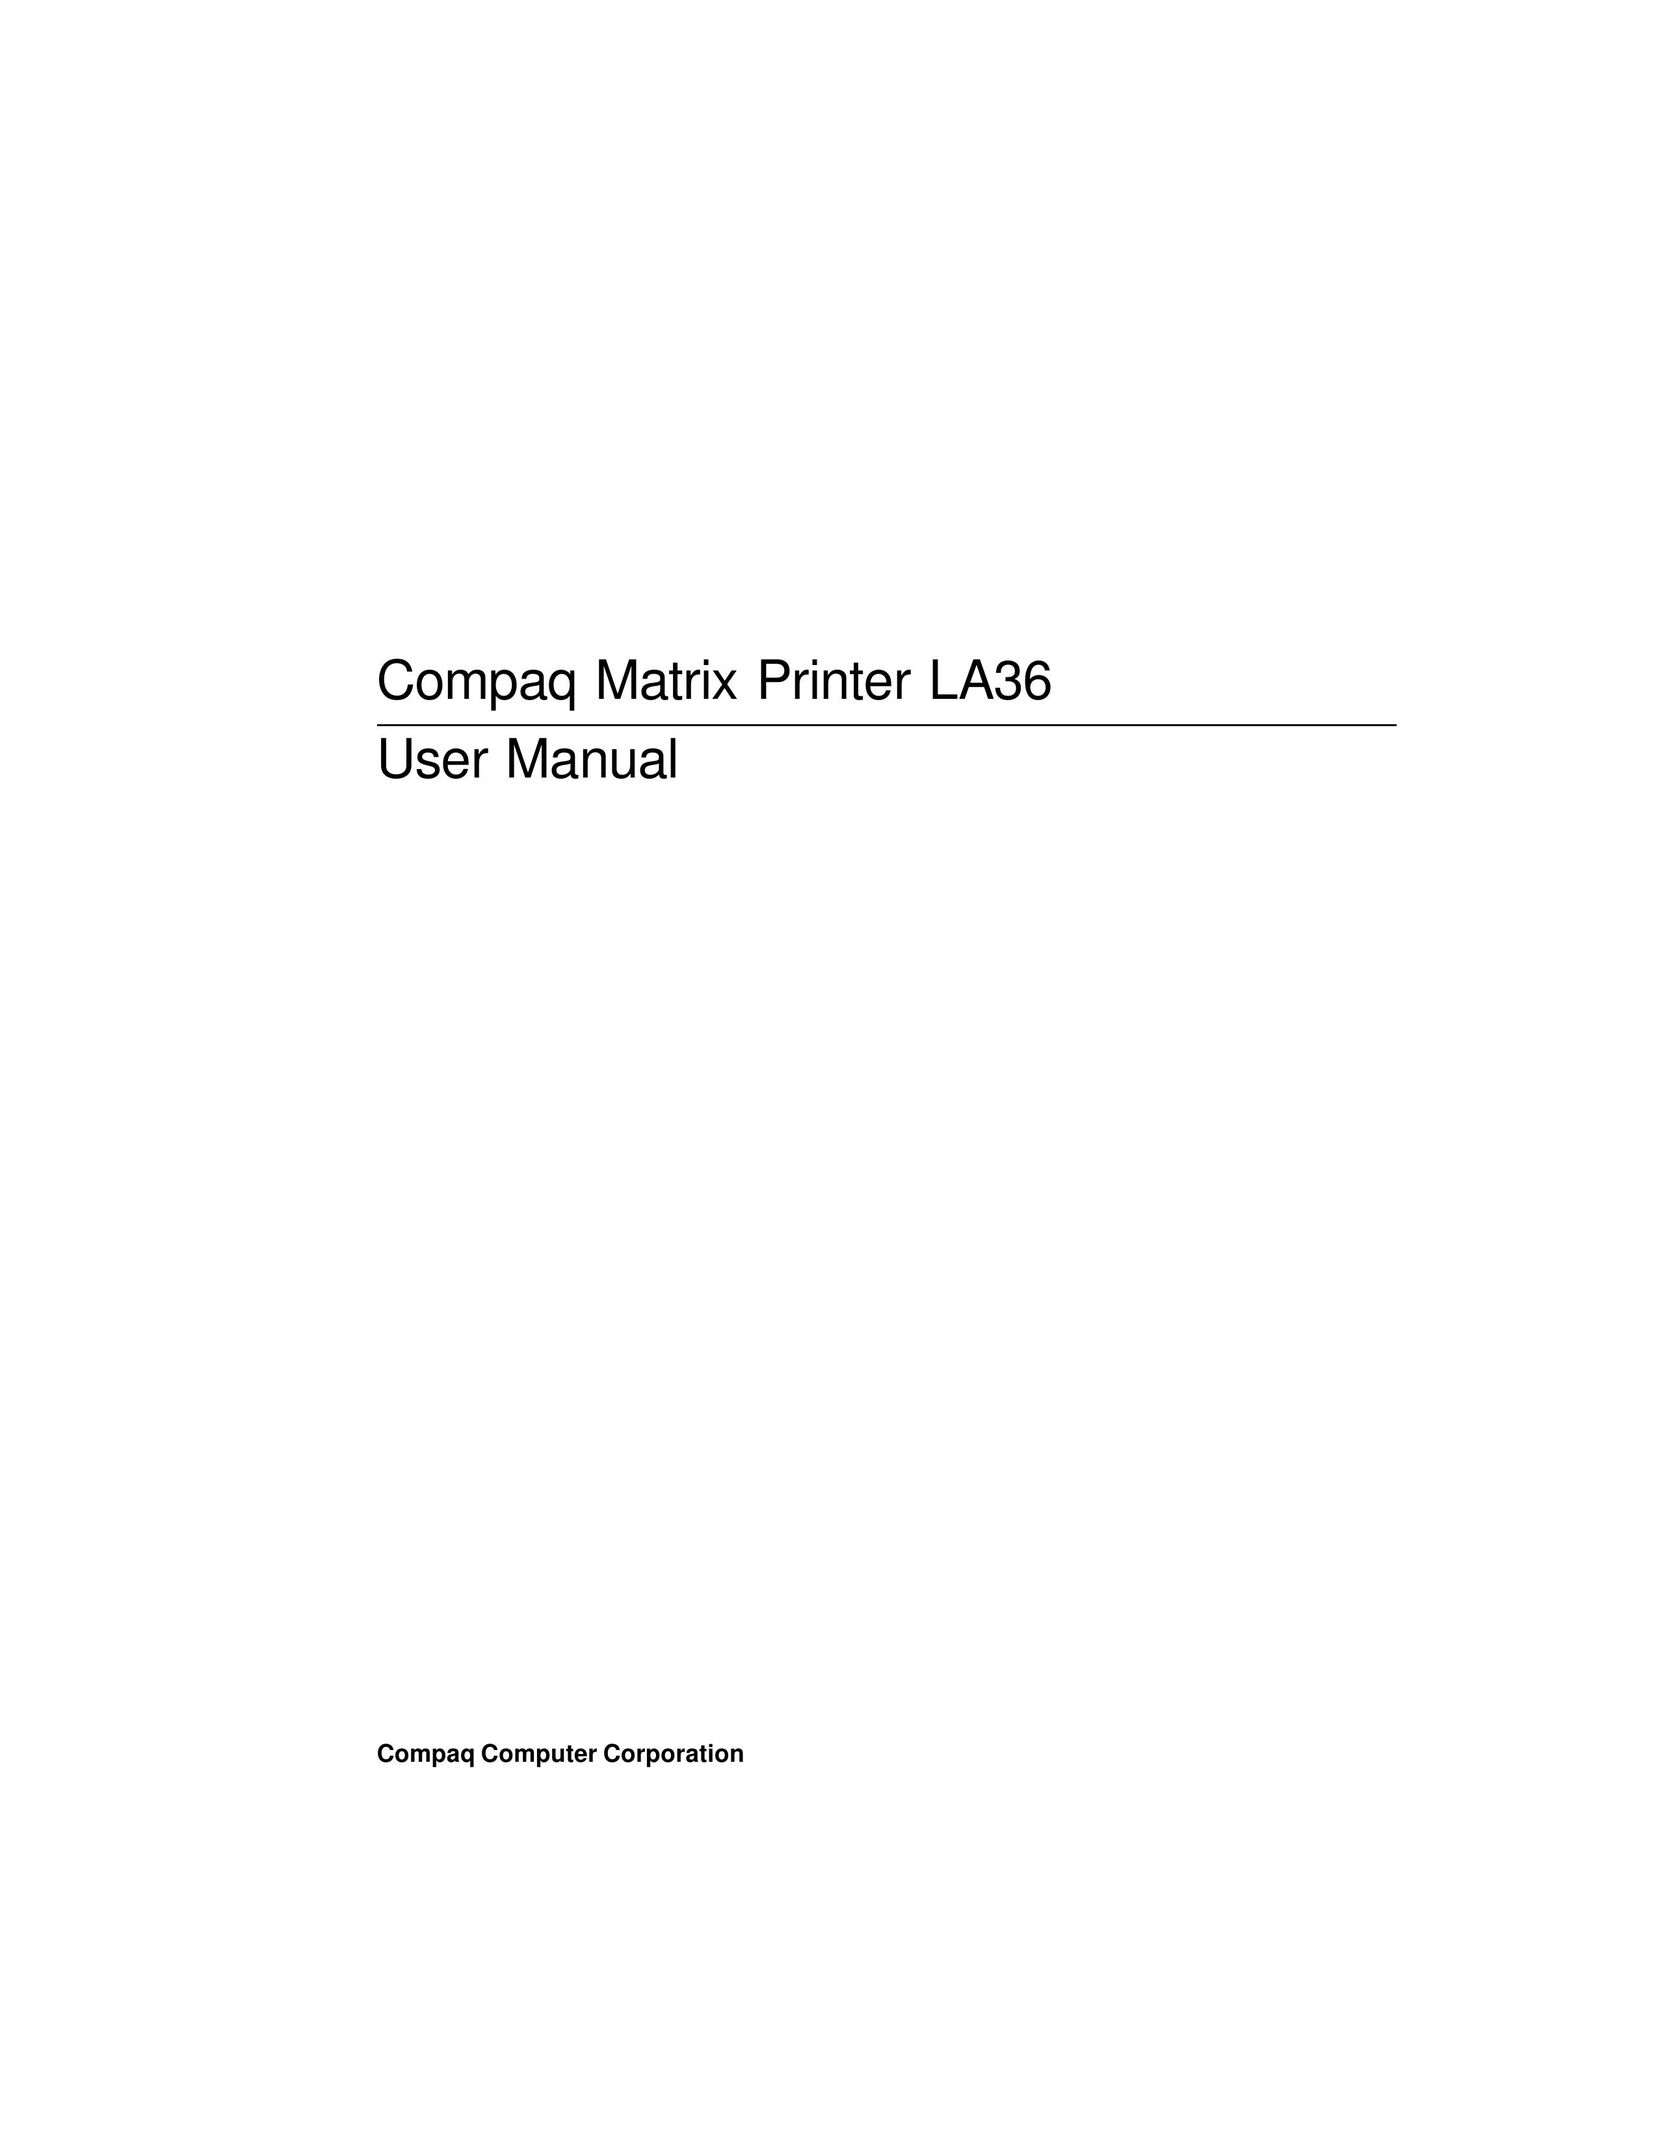 Compaq LA36 Printer User Manual